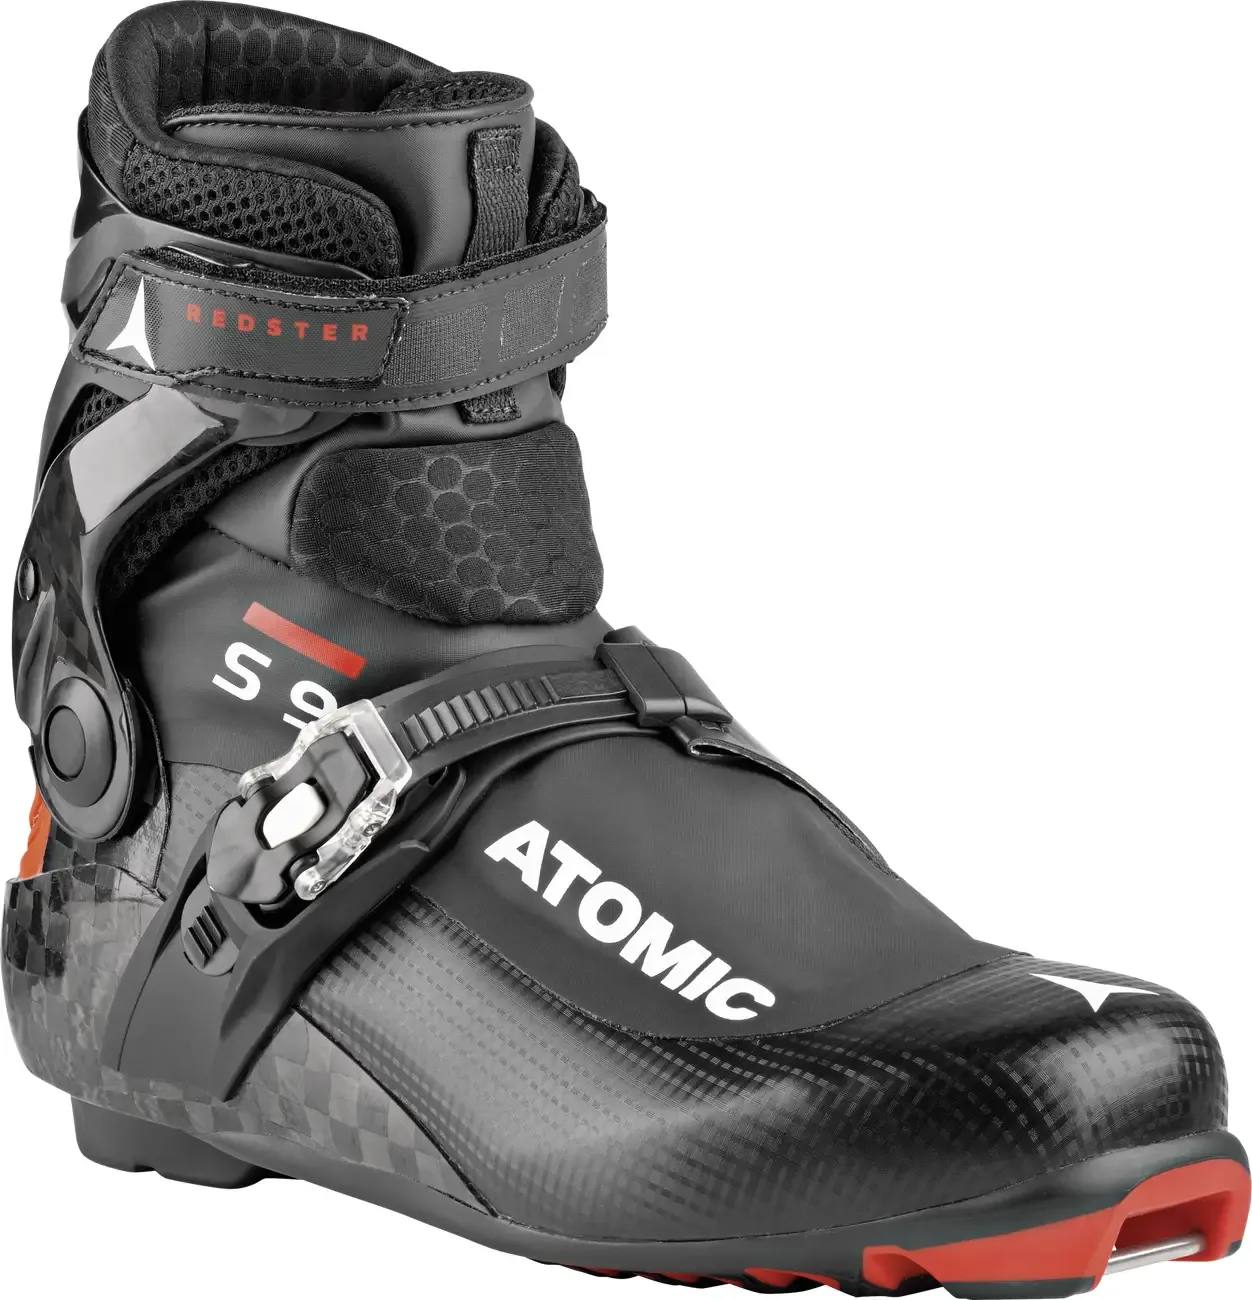 Atomic Redster S9 Skate 22/23 Boots UK 11